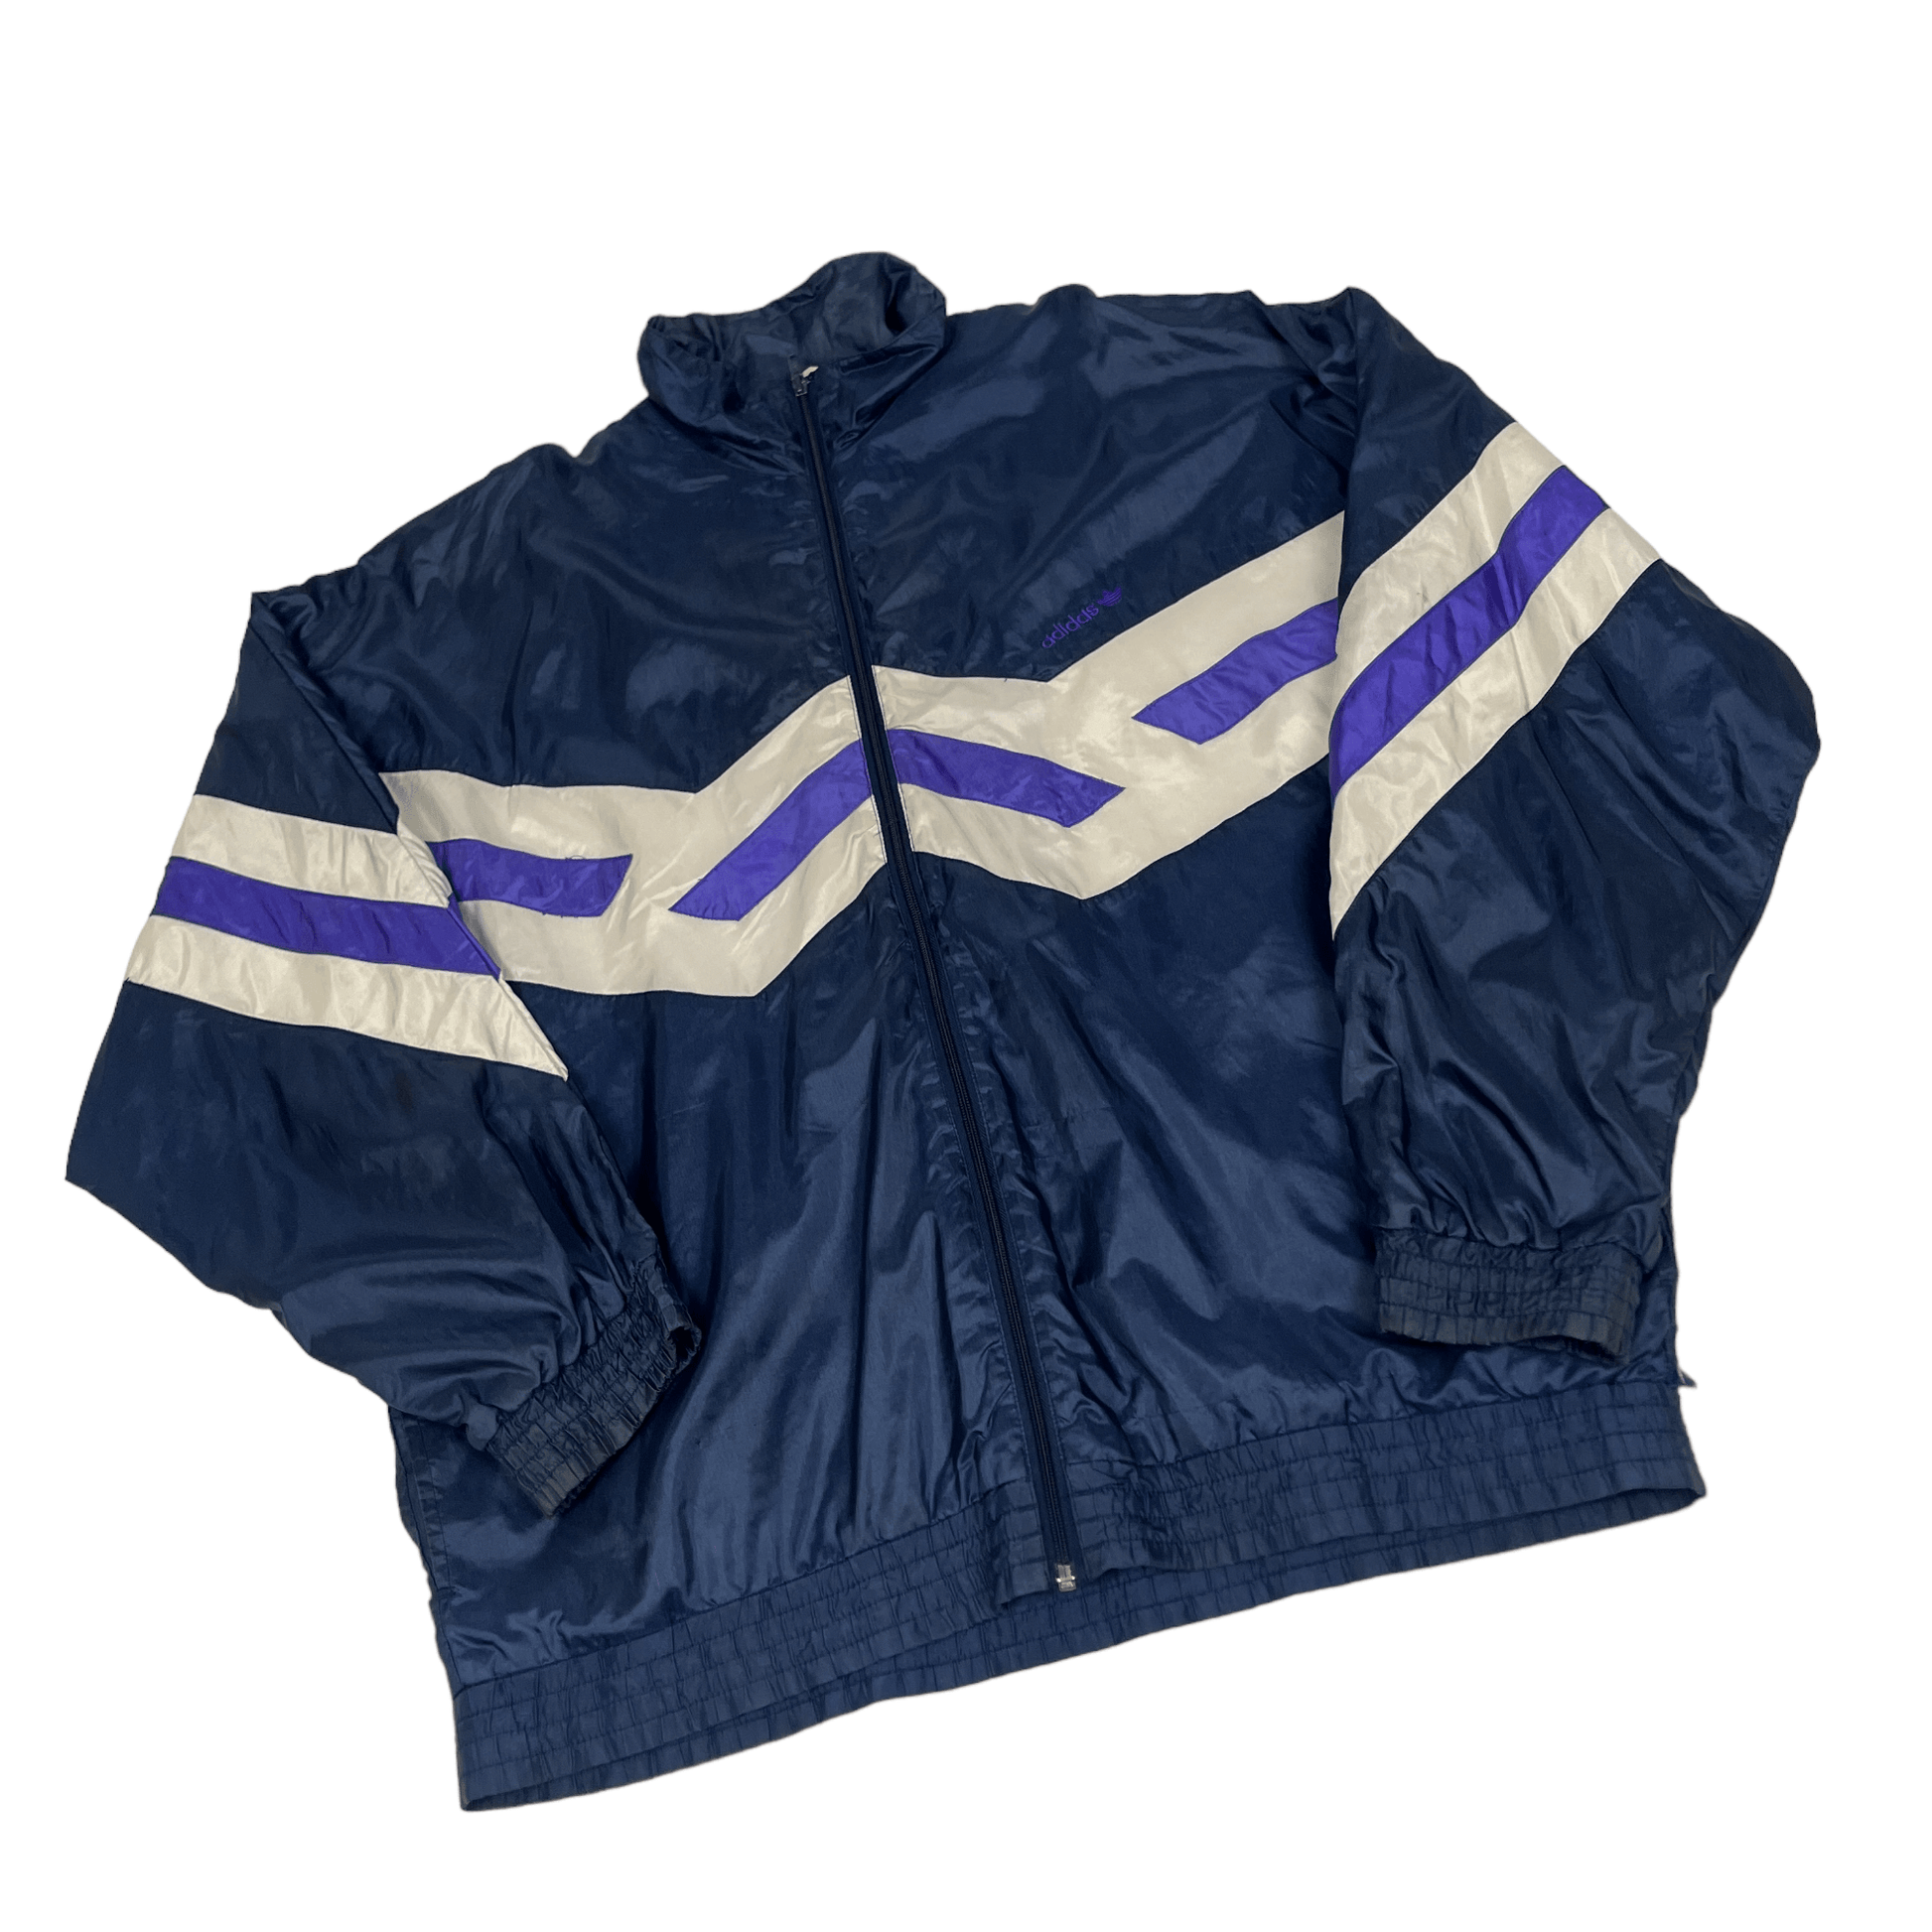 Vintage 90s Navy Blue, Purple + White Adidas Windbreaker - Extra Large - The Streetwear Studio